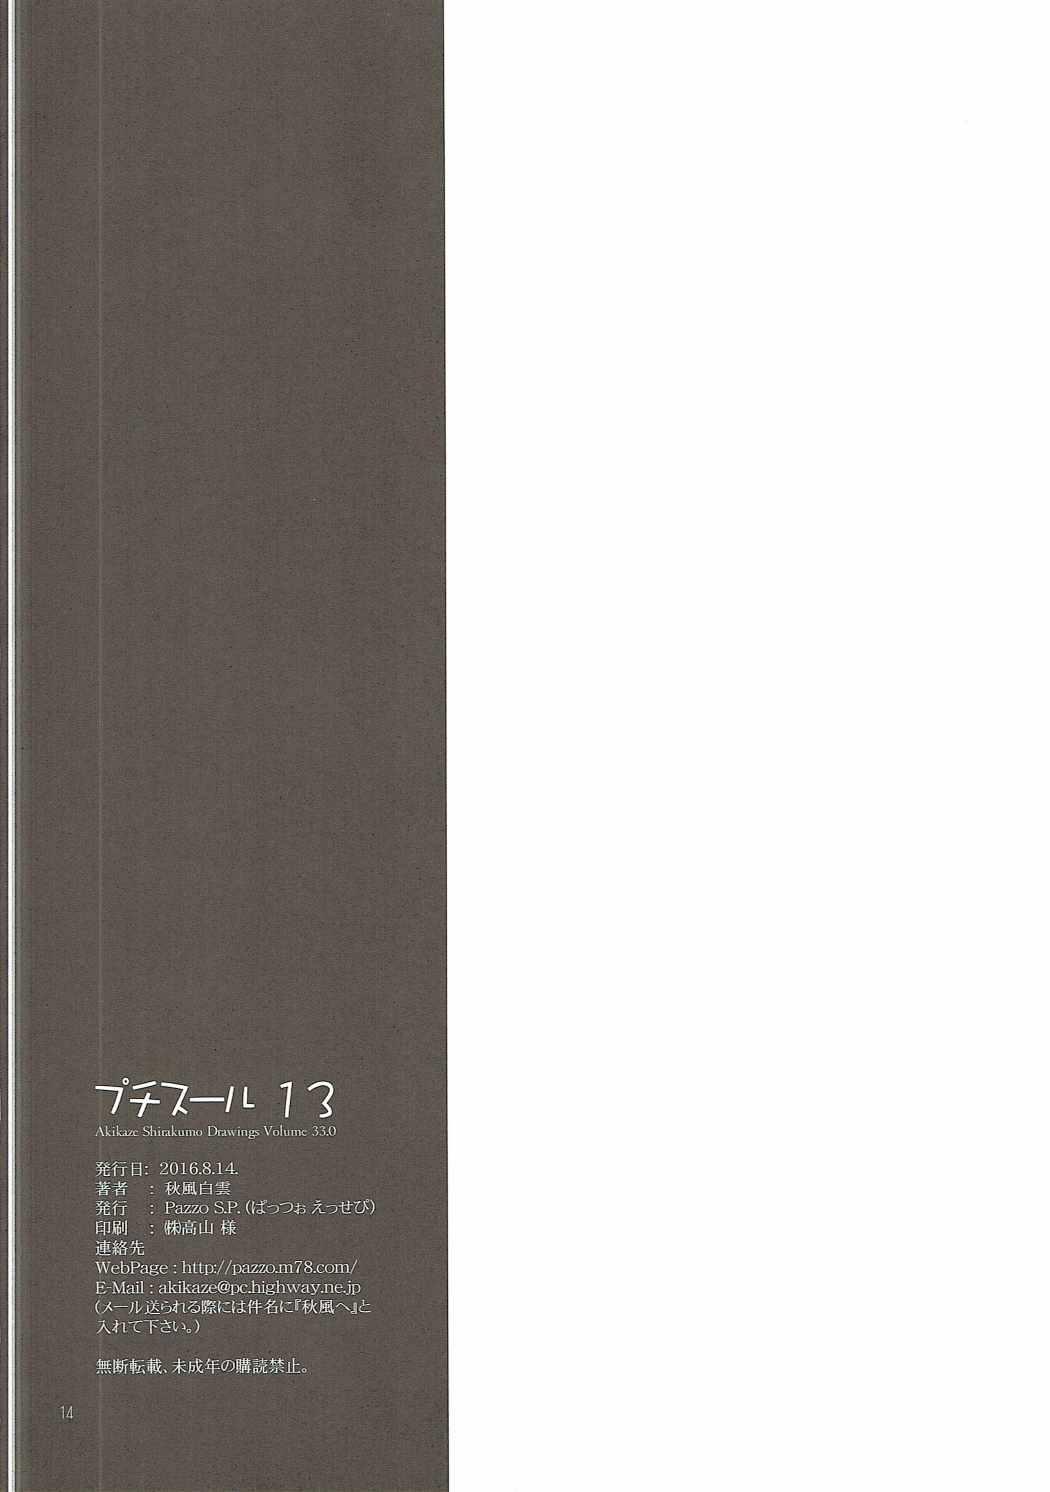 Curves Petite Soeur 13 - Shirobako Deutsche - Page 13